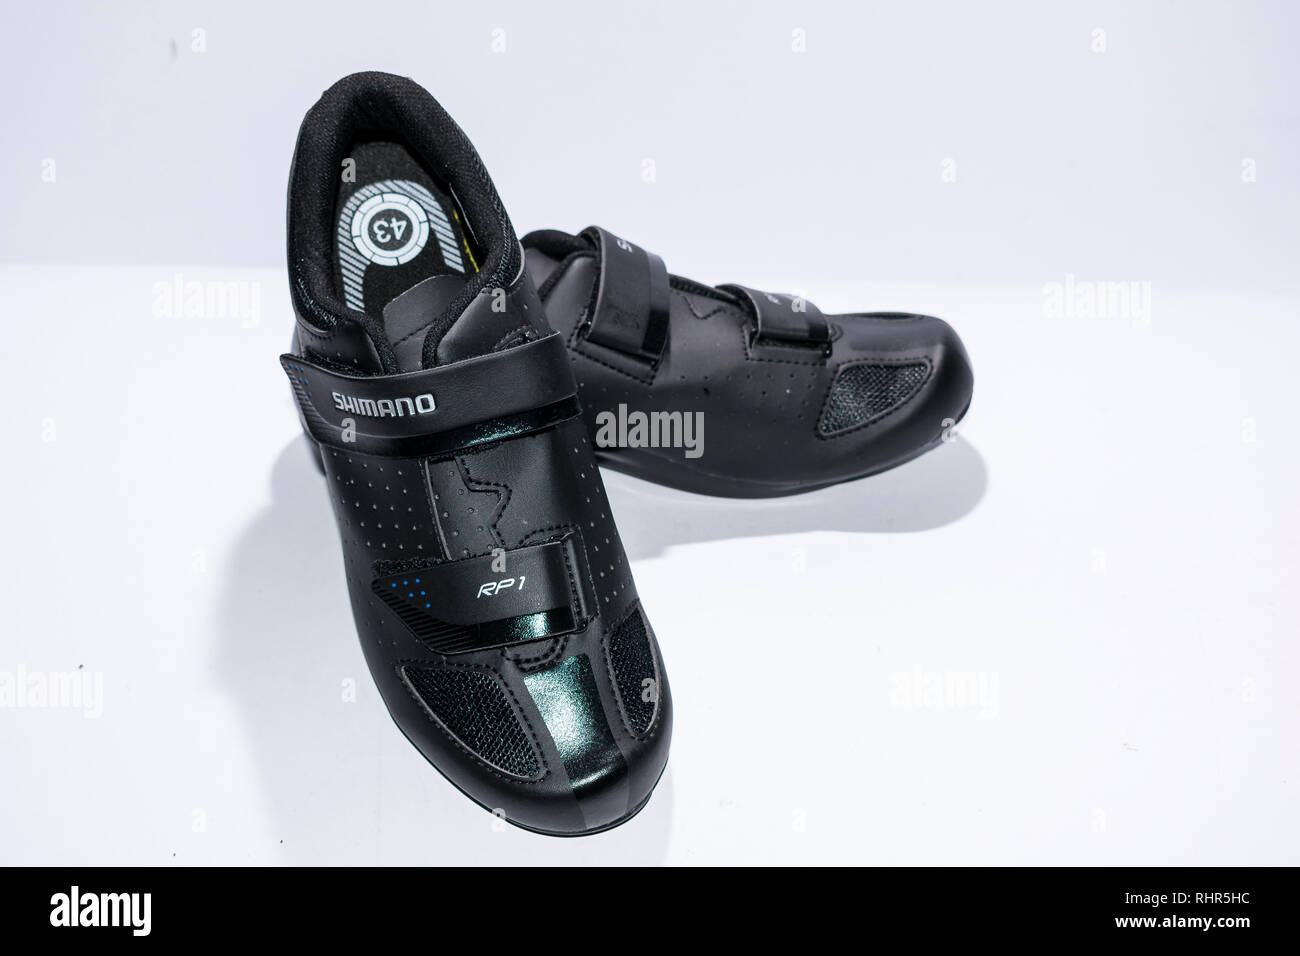 Shimano RP1 Cycling shoes Stock Photo